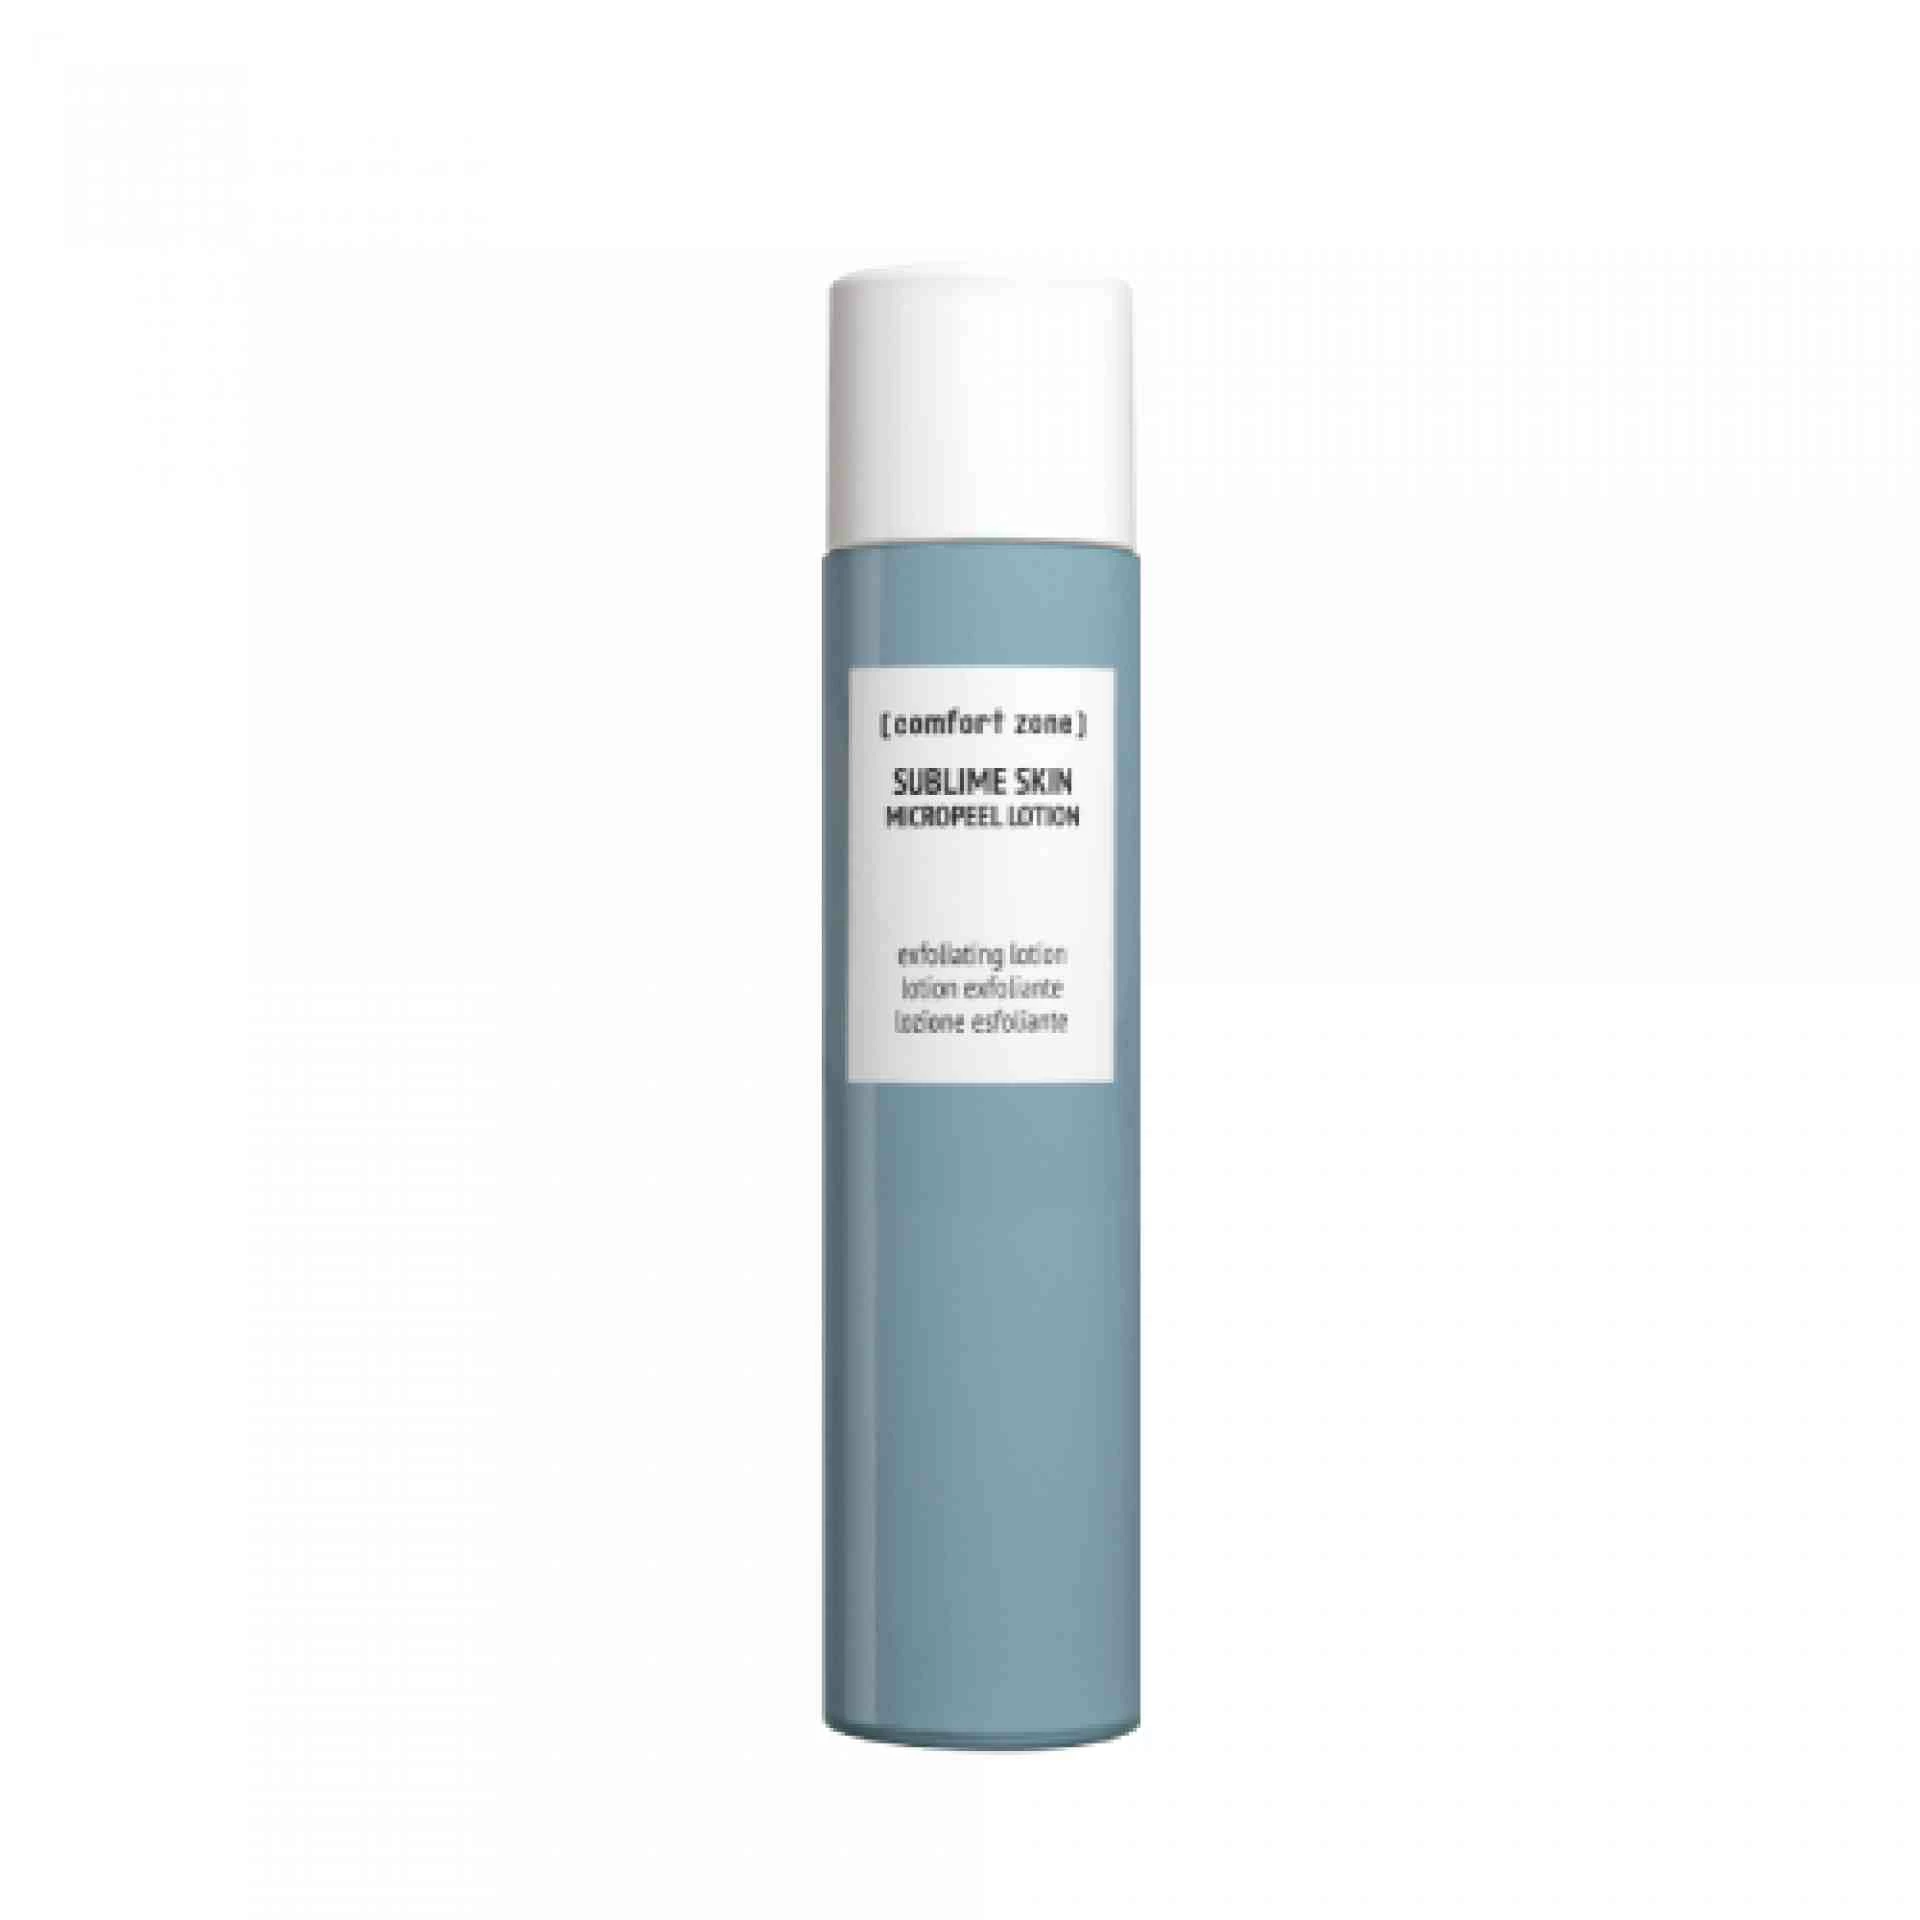 SUBLIME SKIN MICROPEEL LOTION | Loción exfoliante facial 100 ml - Sublime Skin - Comfort Zone ®